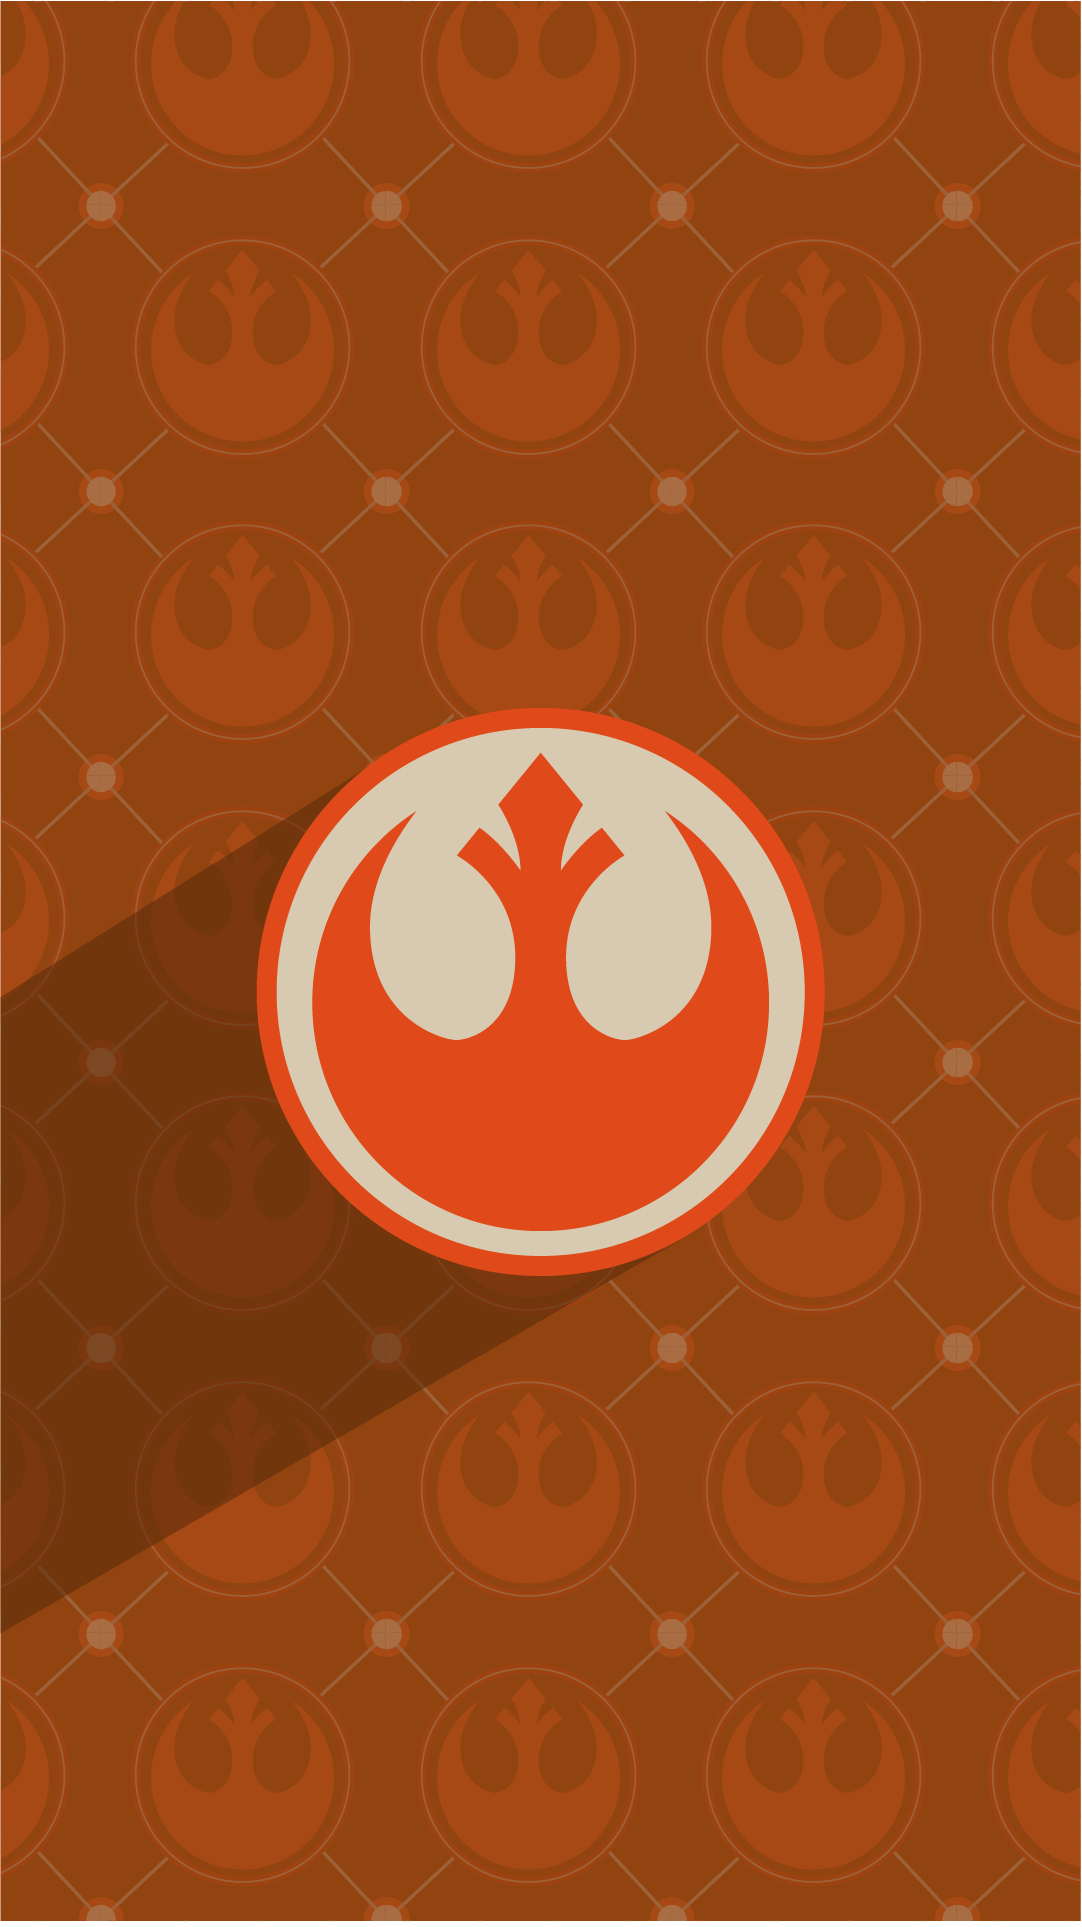 1082x1927 Rebel Star Wars iPhone Wallpapers Top Free Rebel Star Wars iPhone Backgrounds